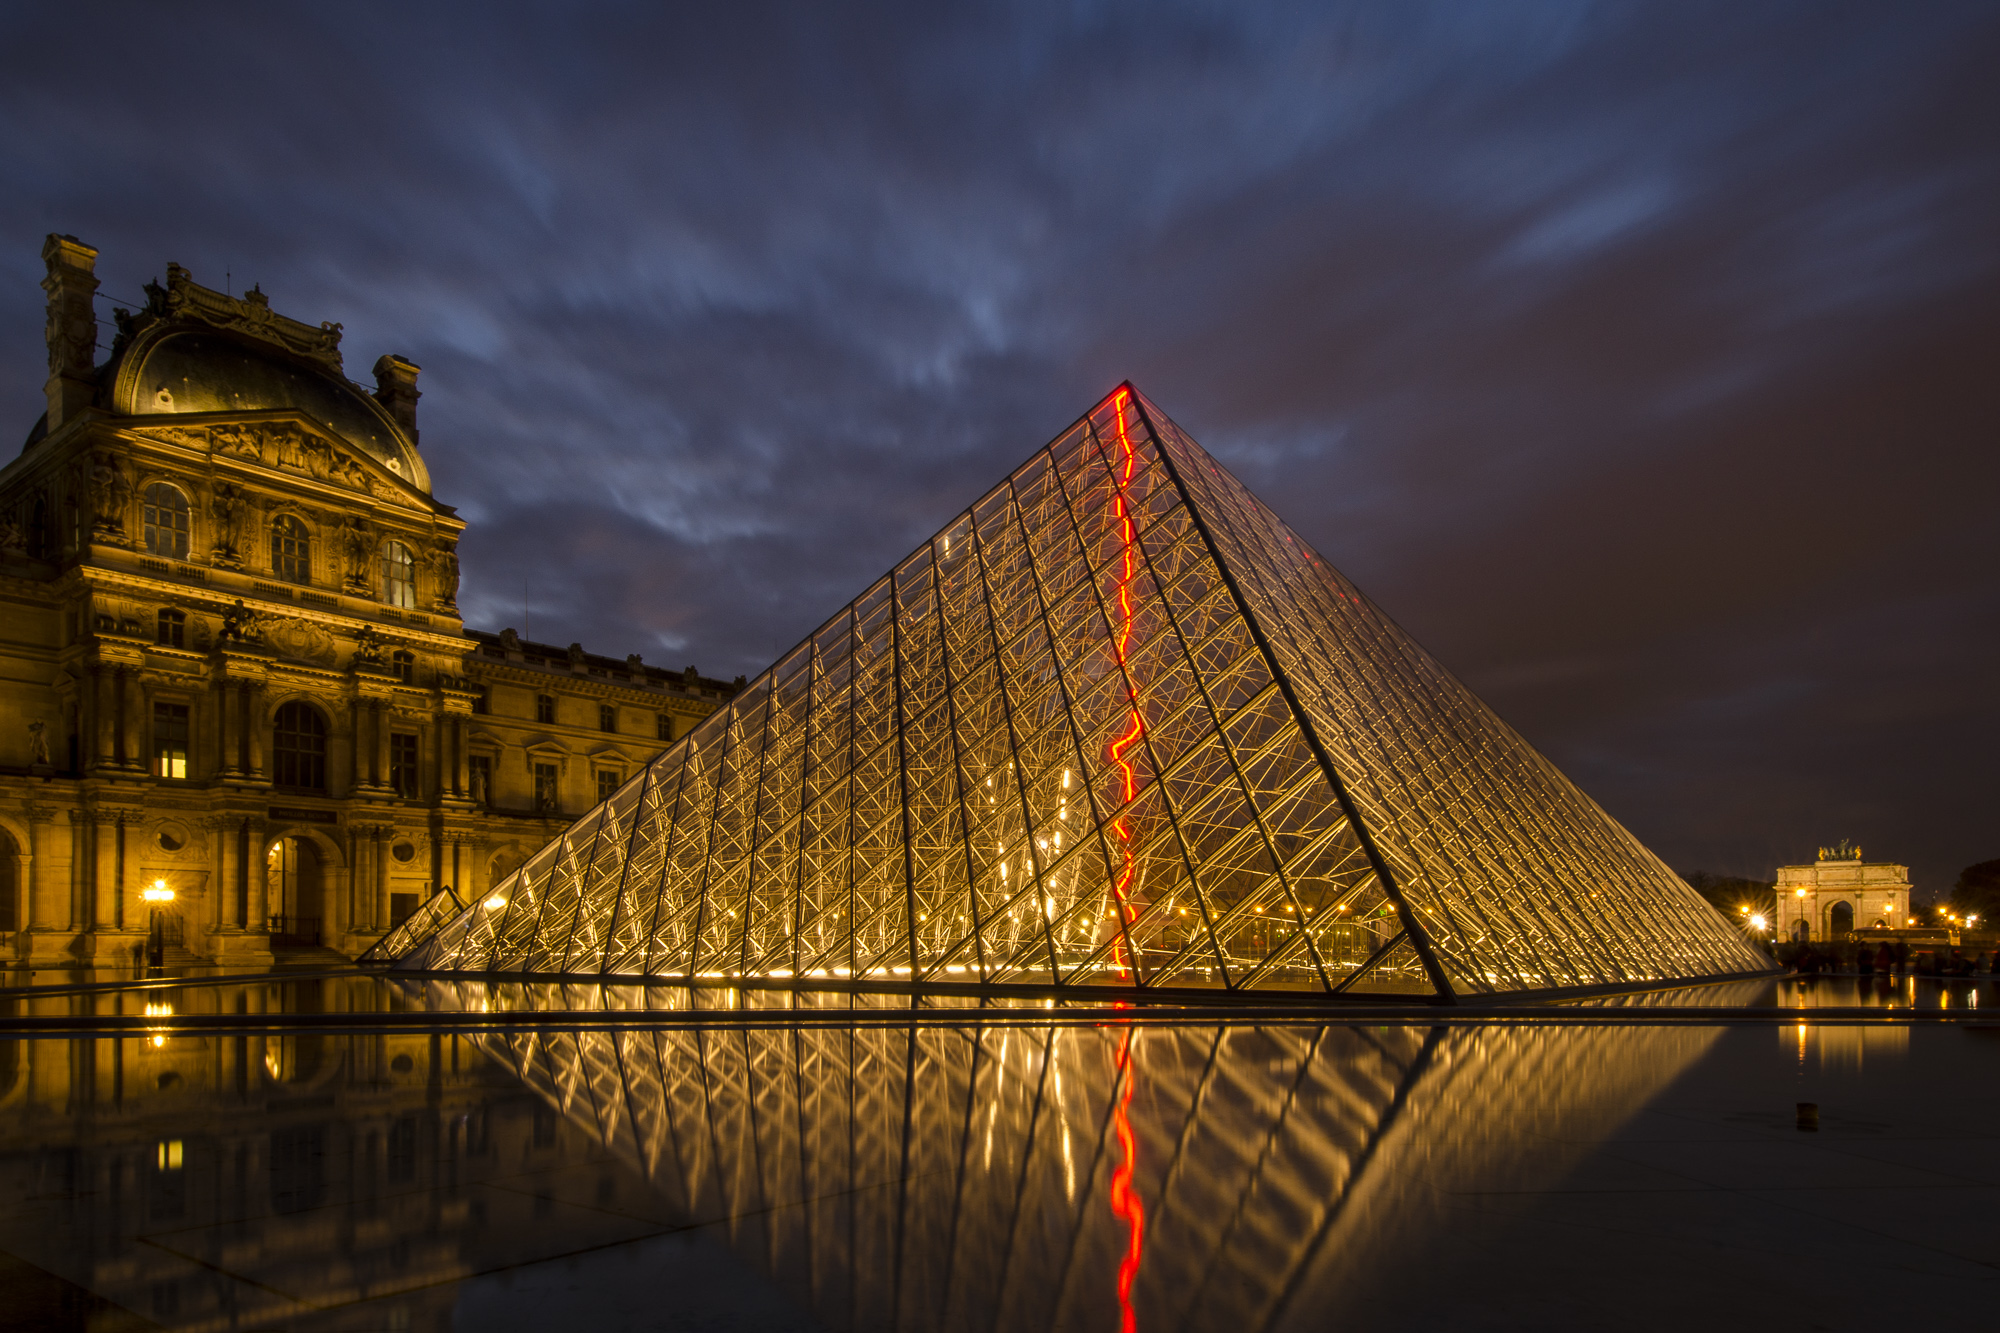 The Louvre Museum, Paris - Squarebox